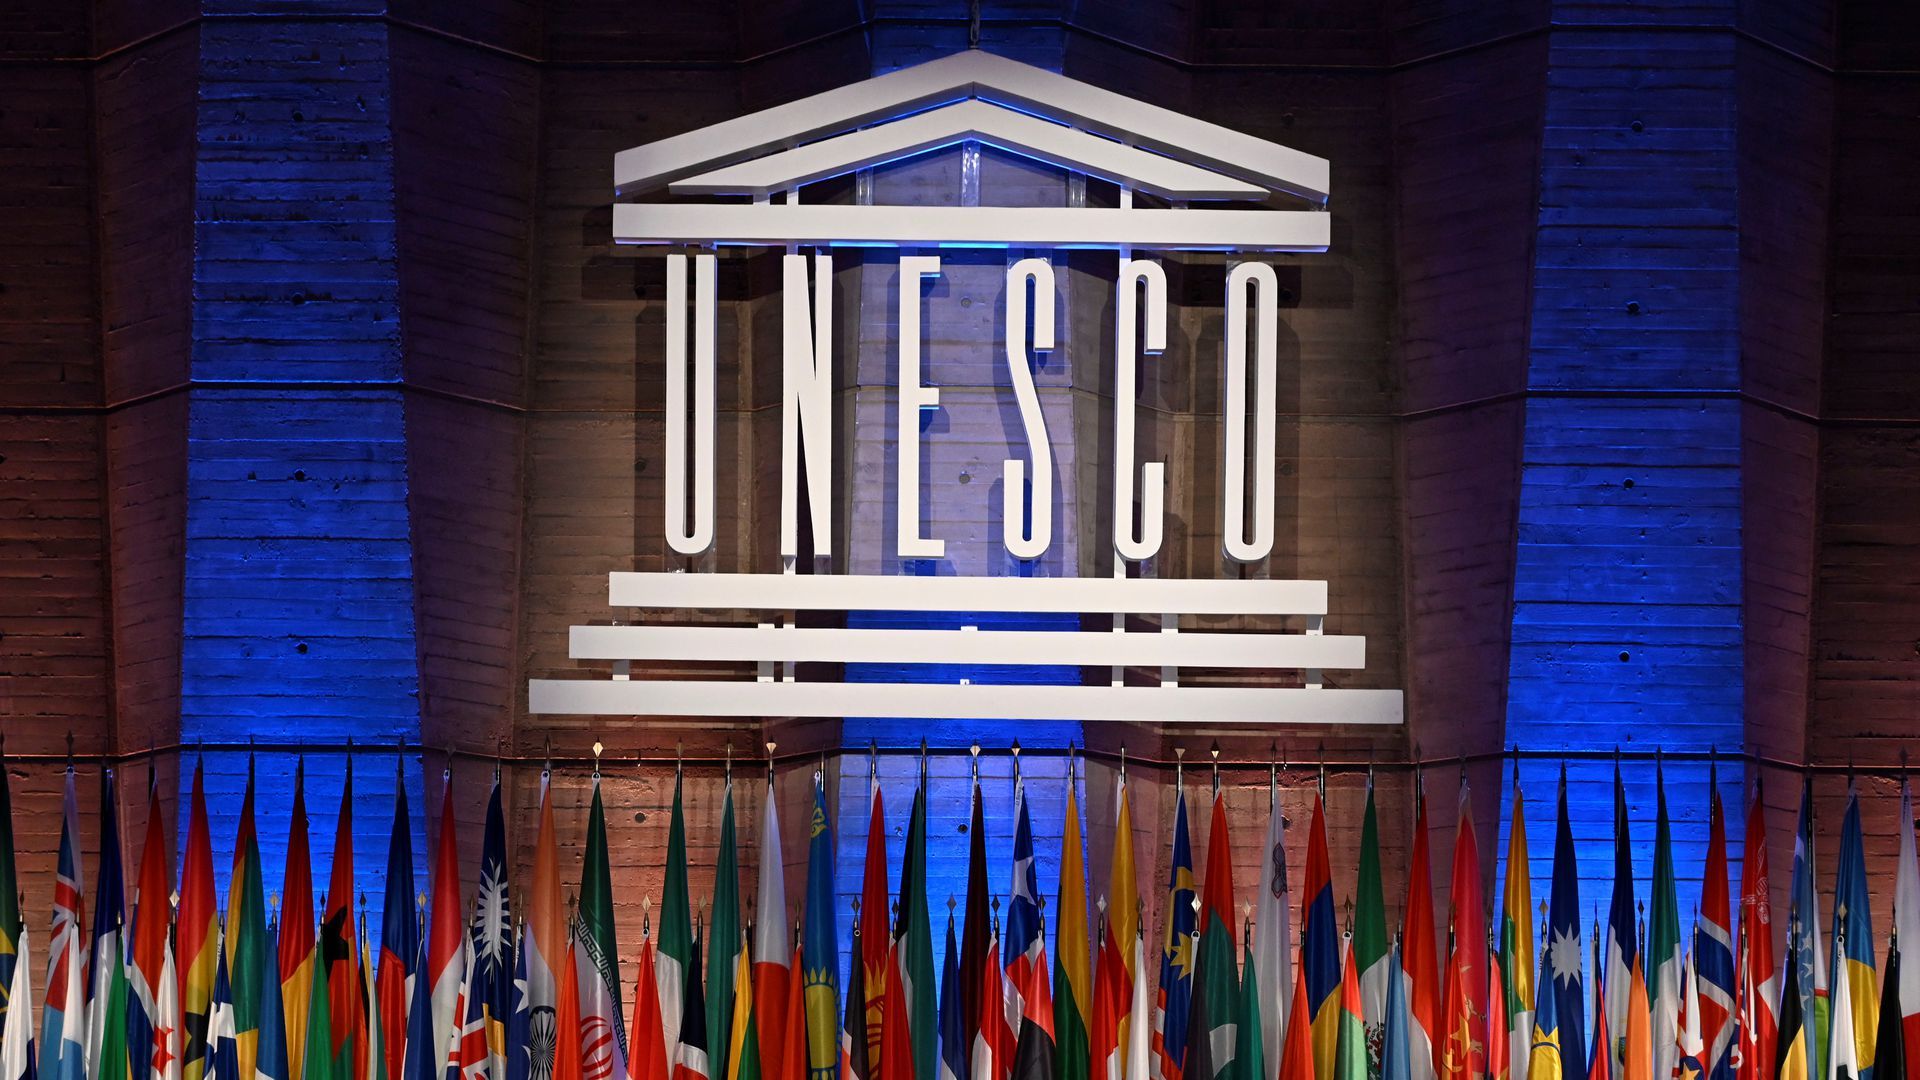 A general view of the UNESCO meeting in November 2019 in Paris. Photo: Mustafa Yalcin/Anadolu Agency via Getty Images